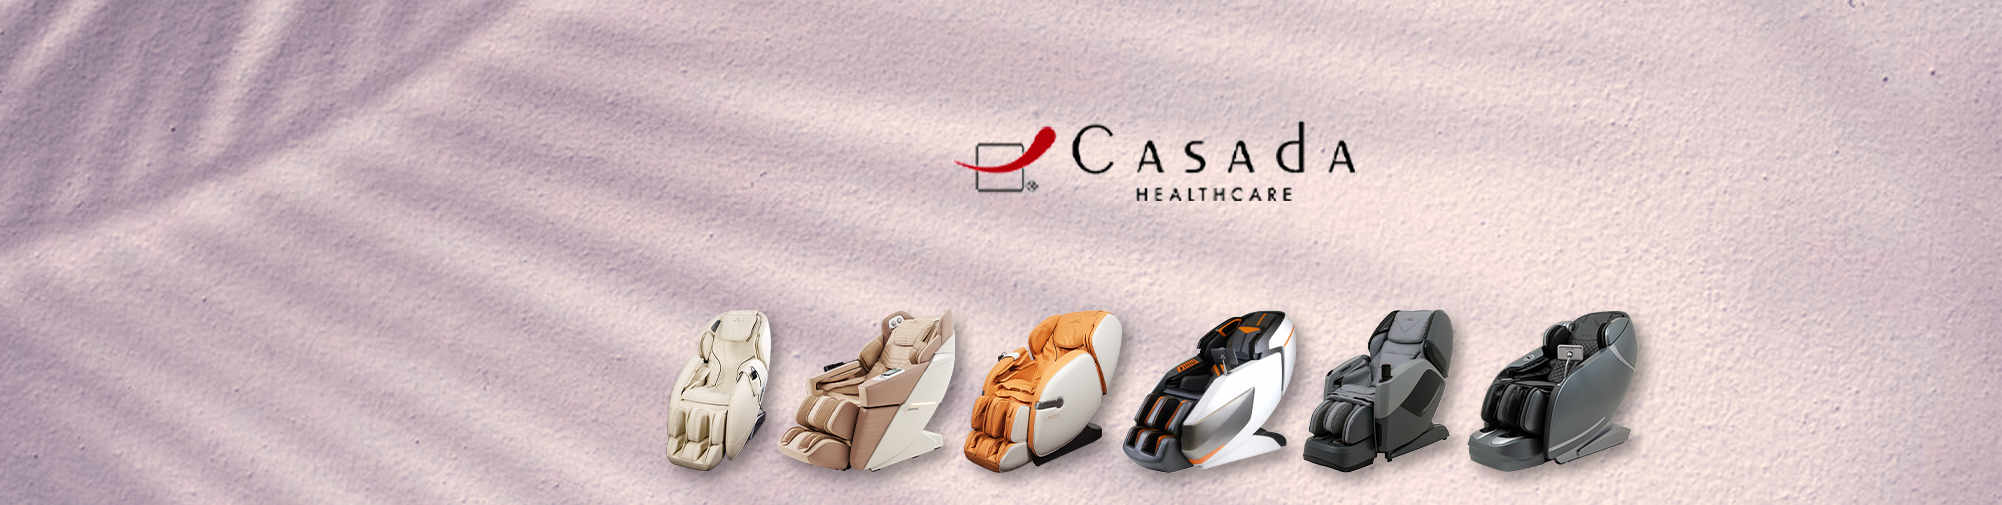 Casada - شریک قابل اعتماد | ماساژ صندلی جهان